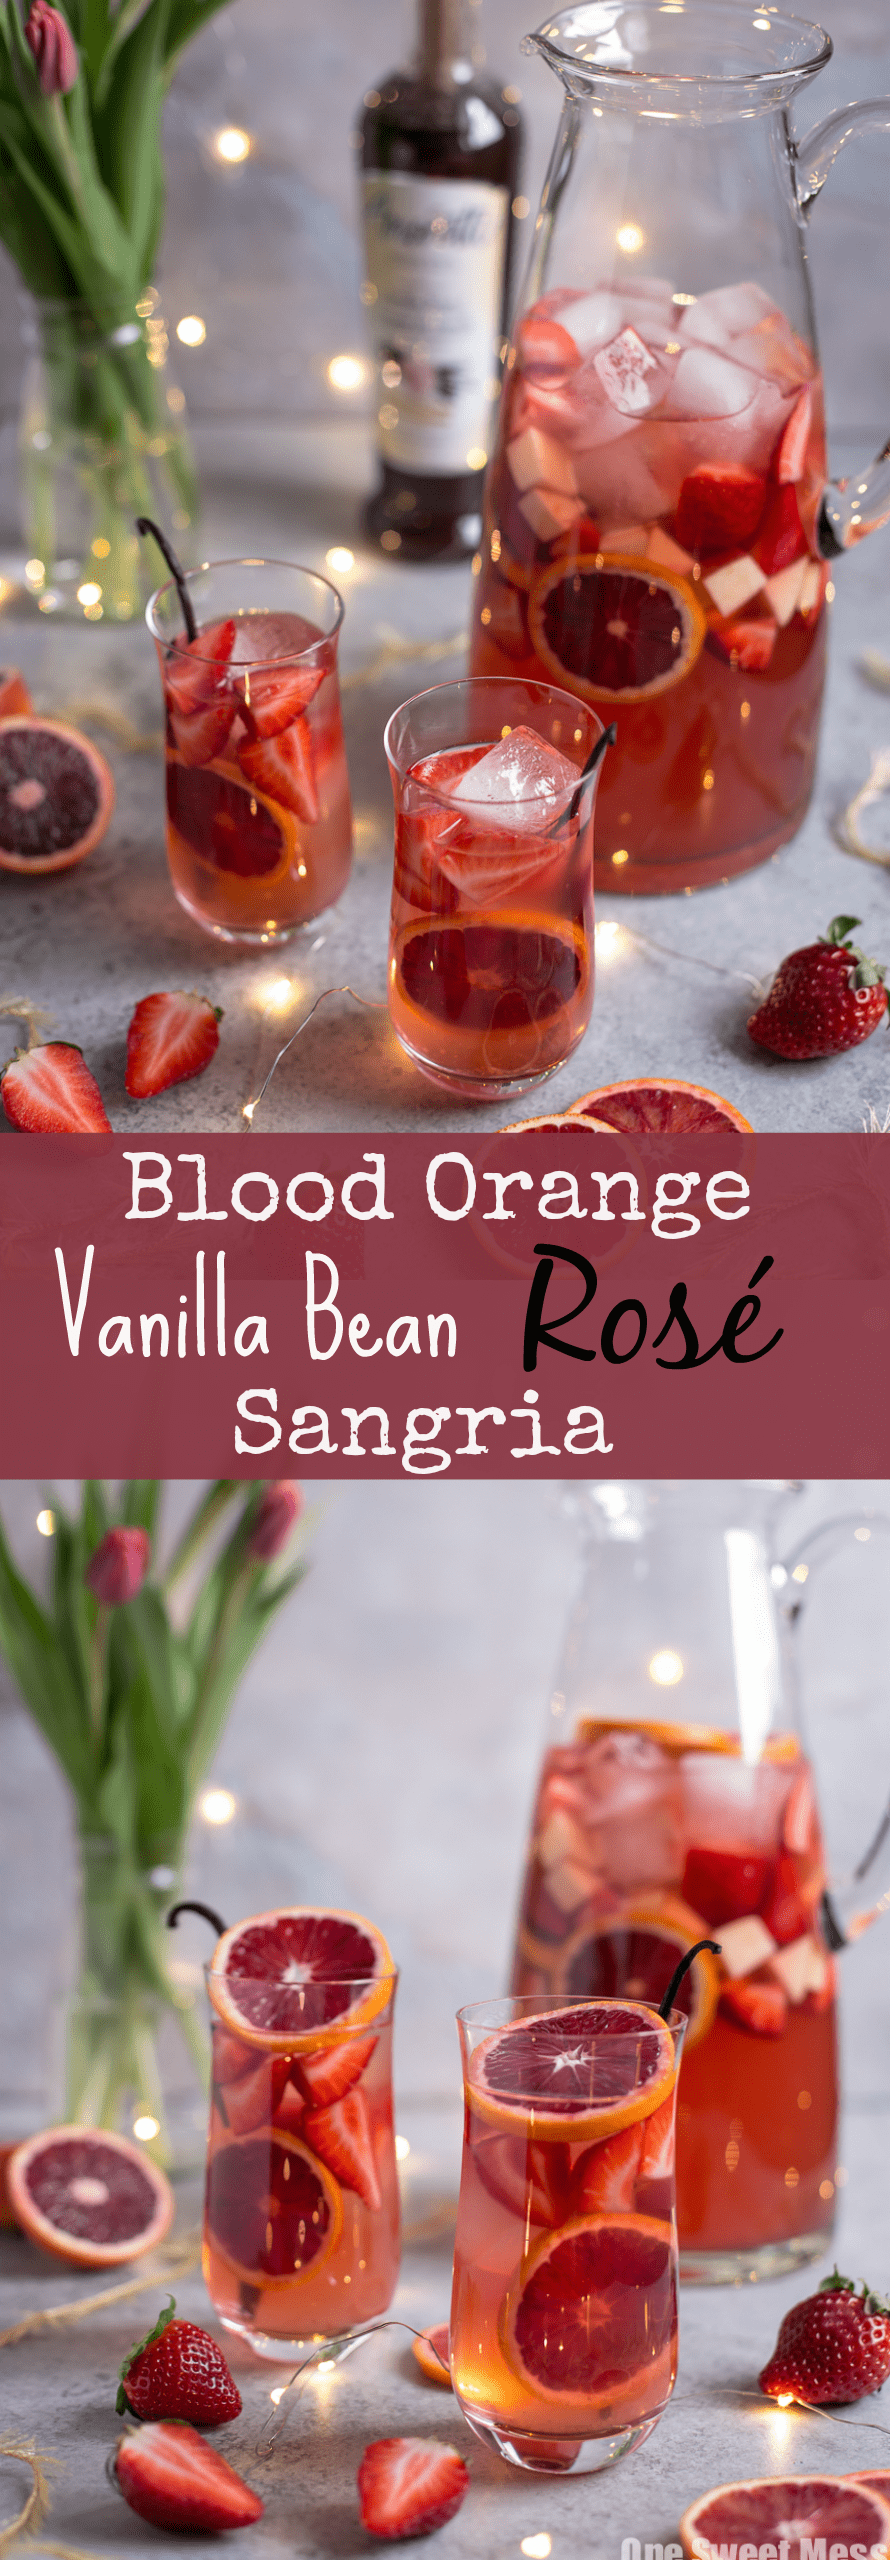 Blood Orange Vanilla Bean Rose Sangria